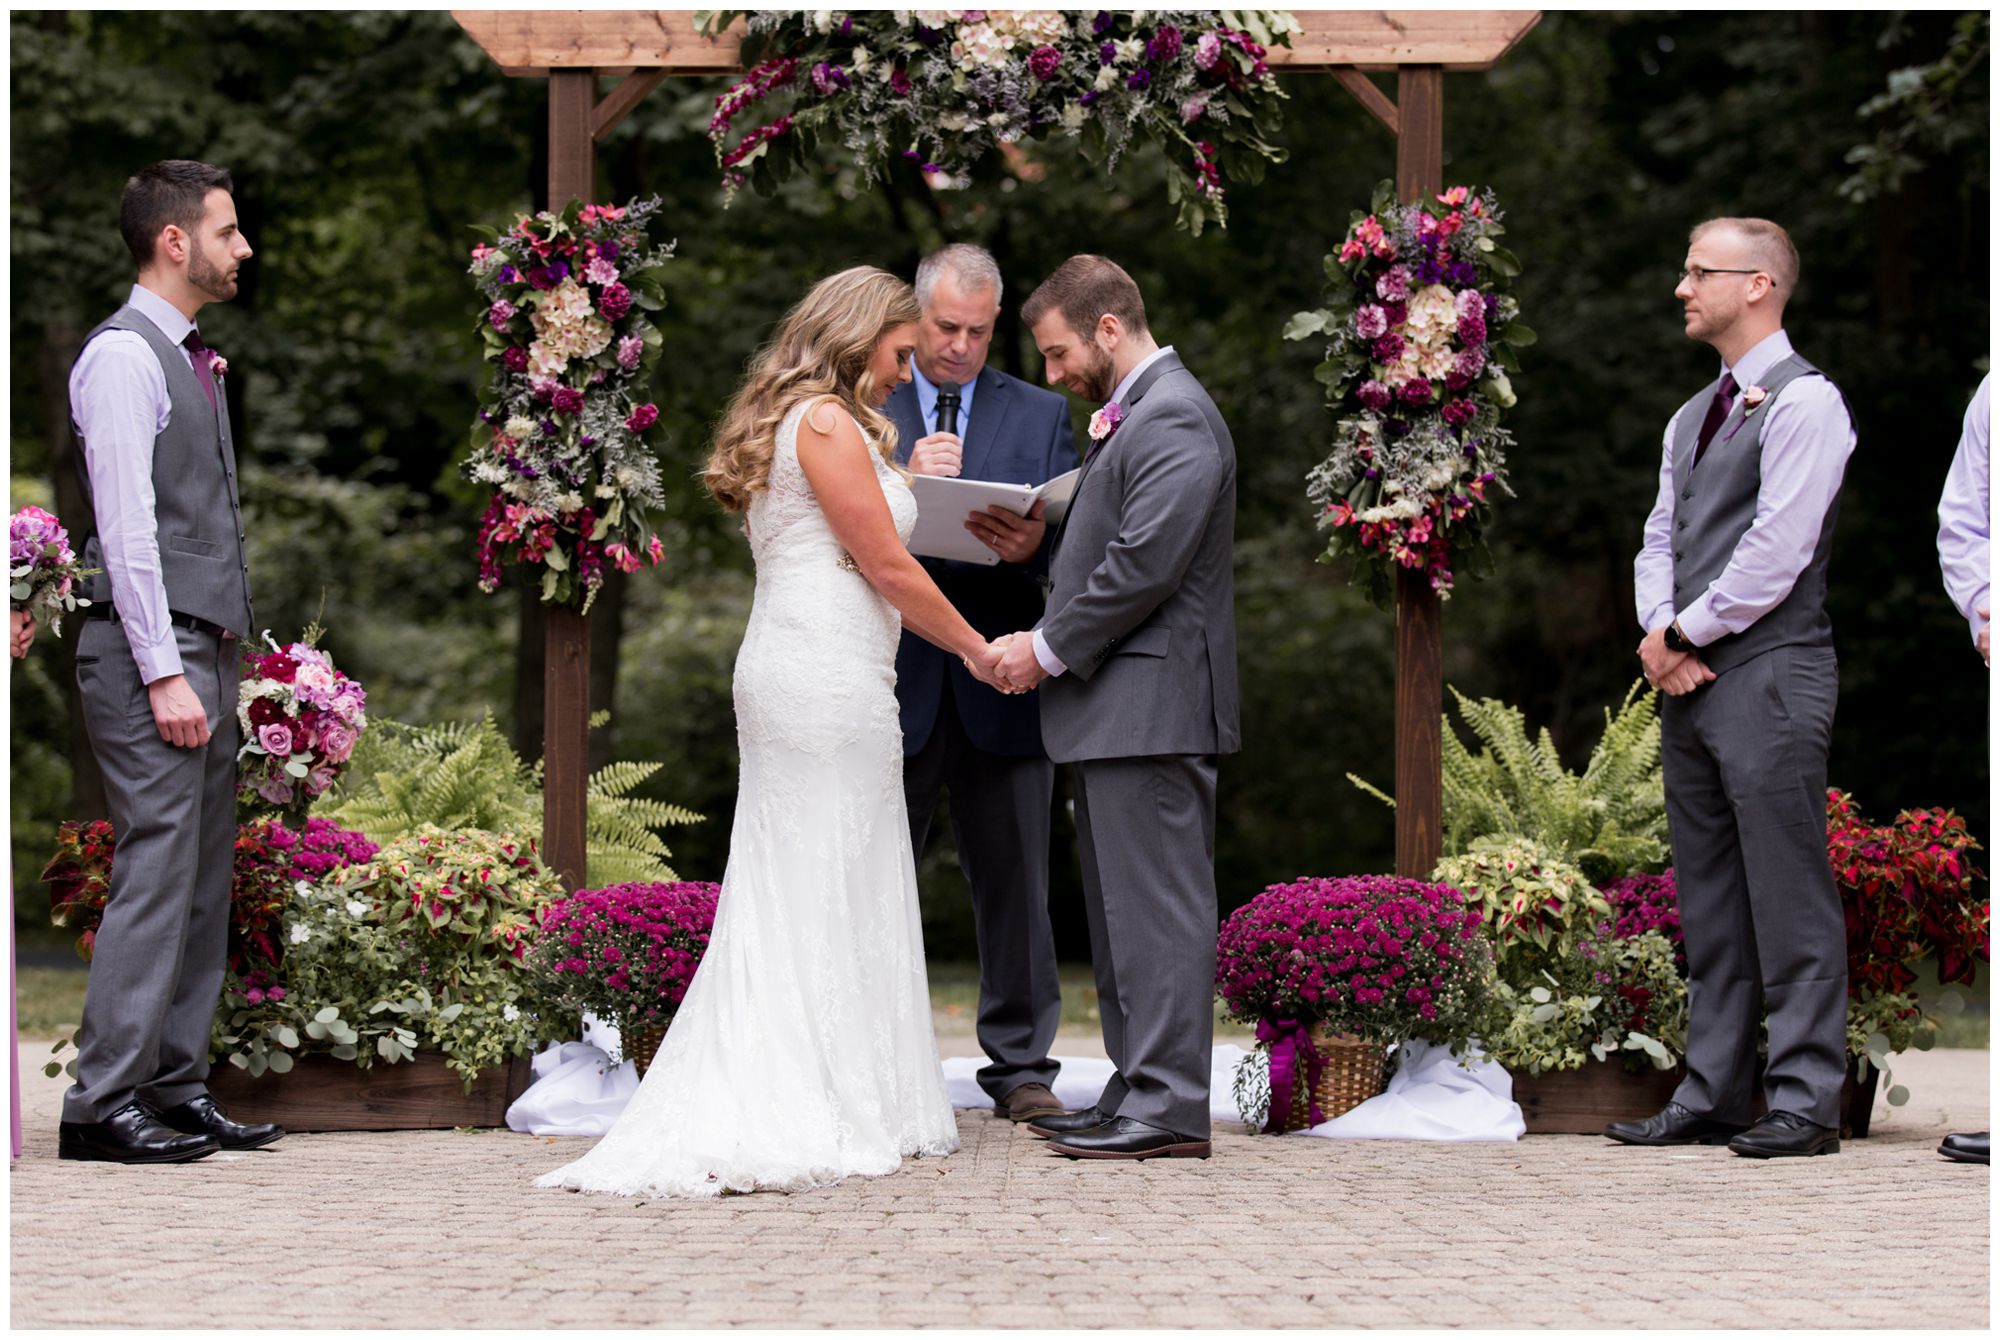 Wabash Indiana wedding ceremony at Charley Creek Gardens